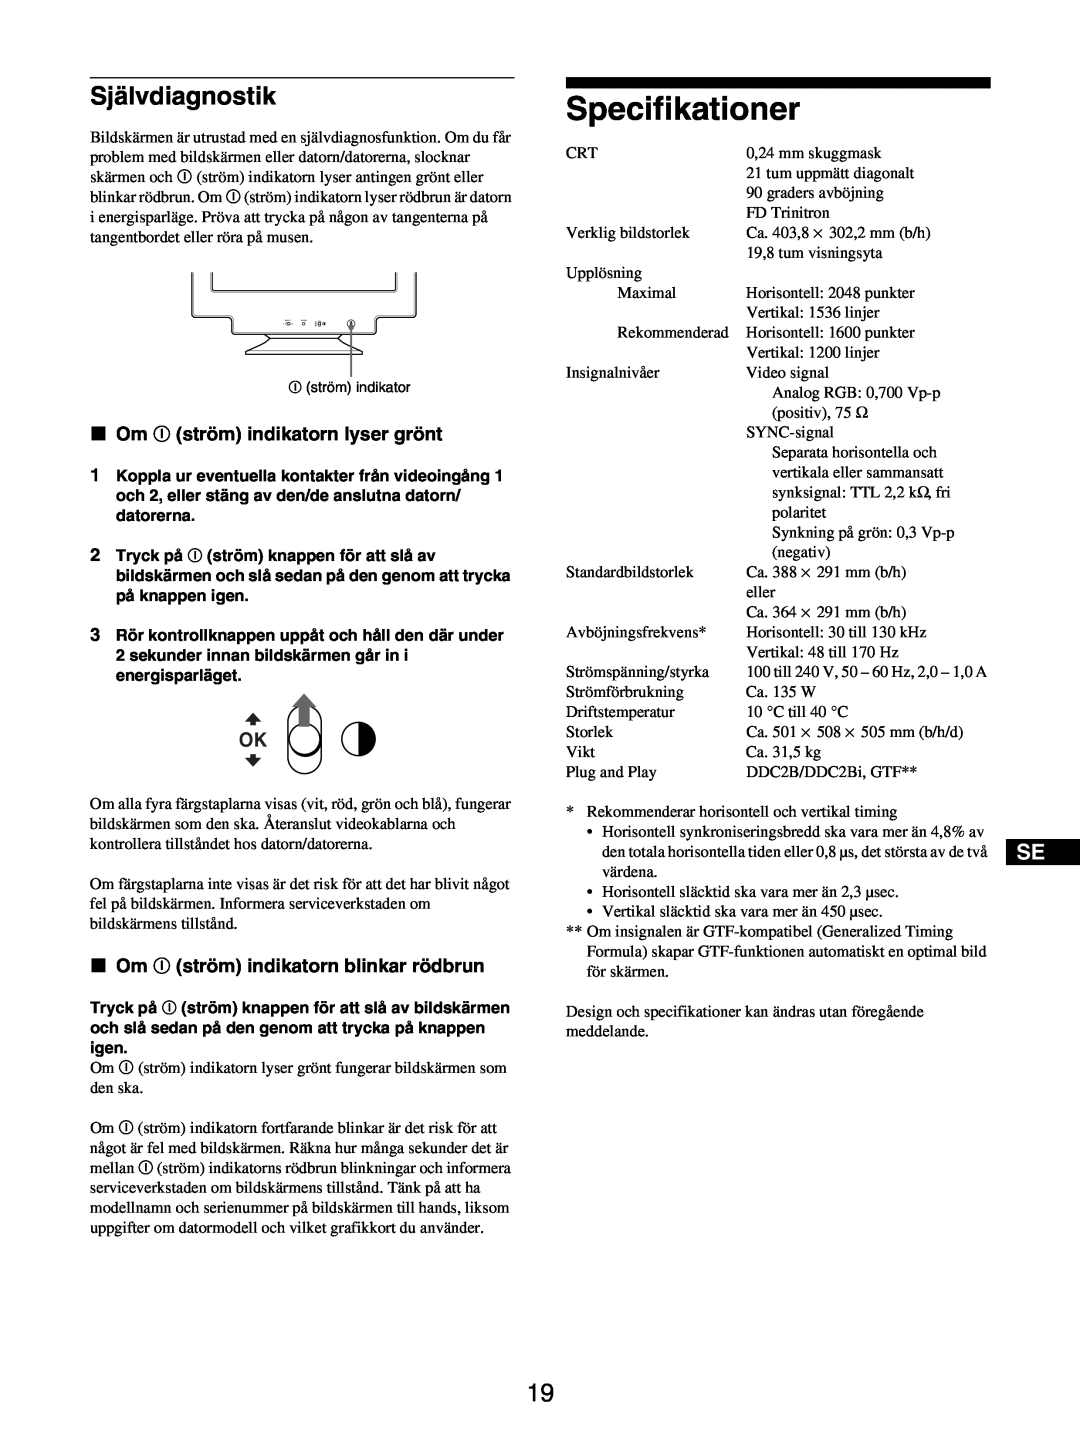 Sony GDM-5510 operating instructions Specifikationer, Självdiagnostik, x Om ! ström indikatorn lyser grönt 